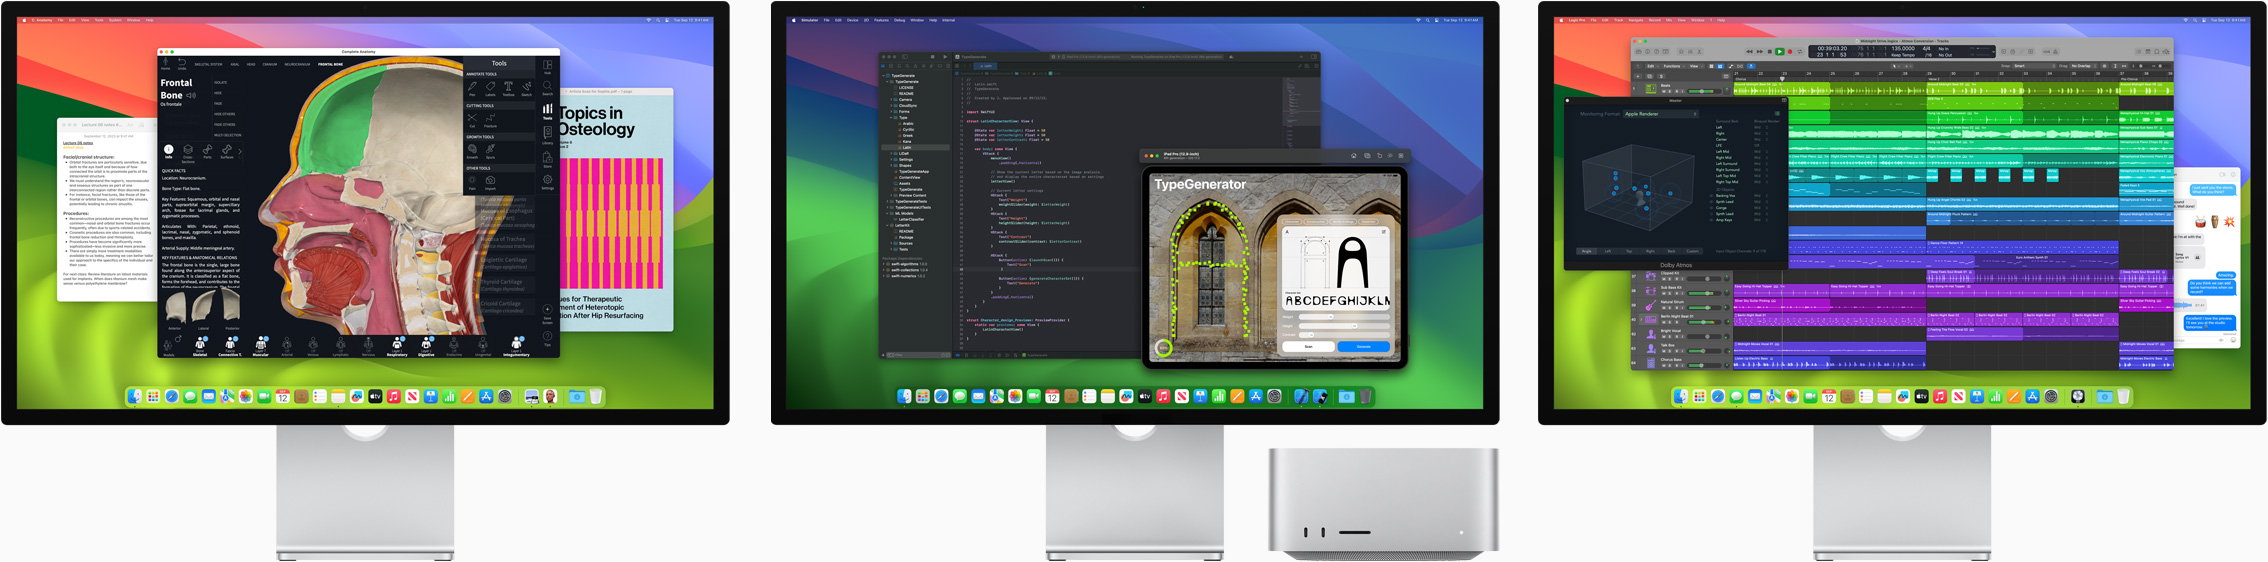 Mac Studio และ Studio Display จำนวน 3 จอ โดยในแต่ละหน้าจอเปิดแอปที่แตกต่างกัน